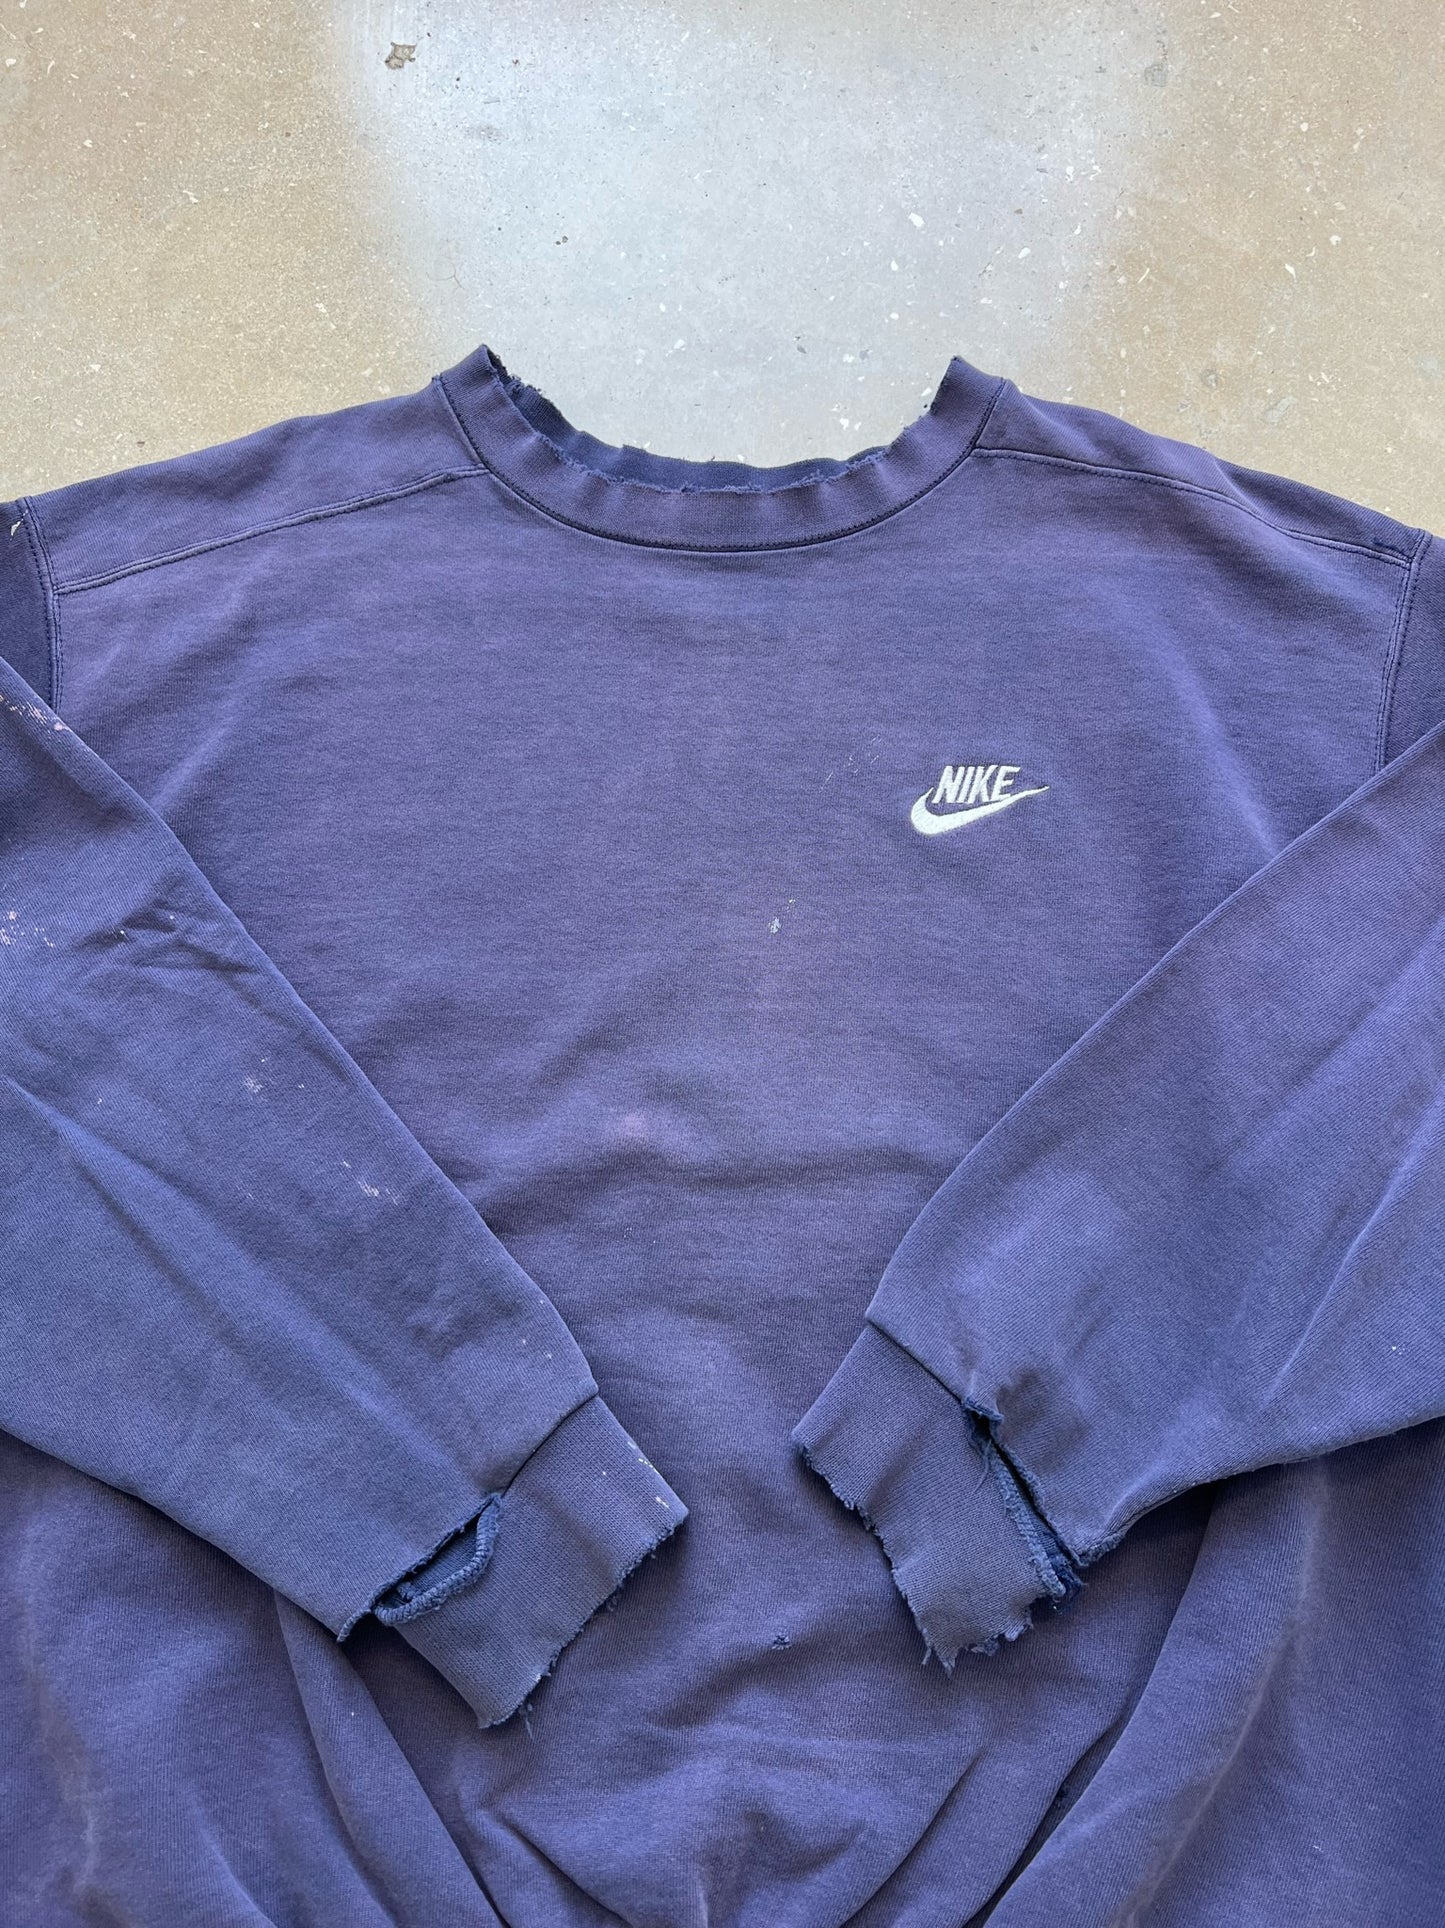 90's Purple Nike Crewneck XL